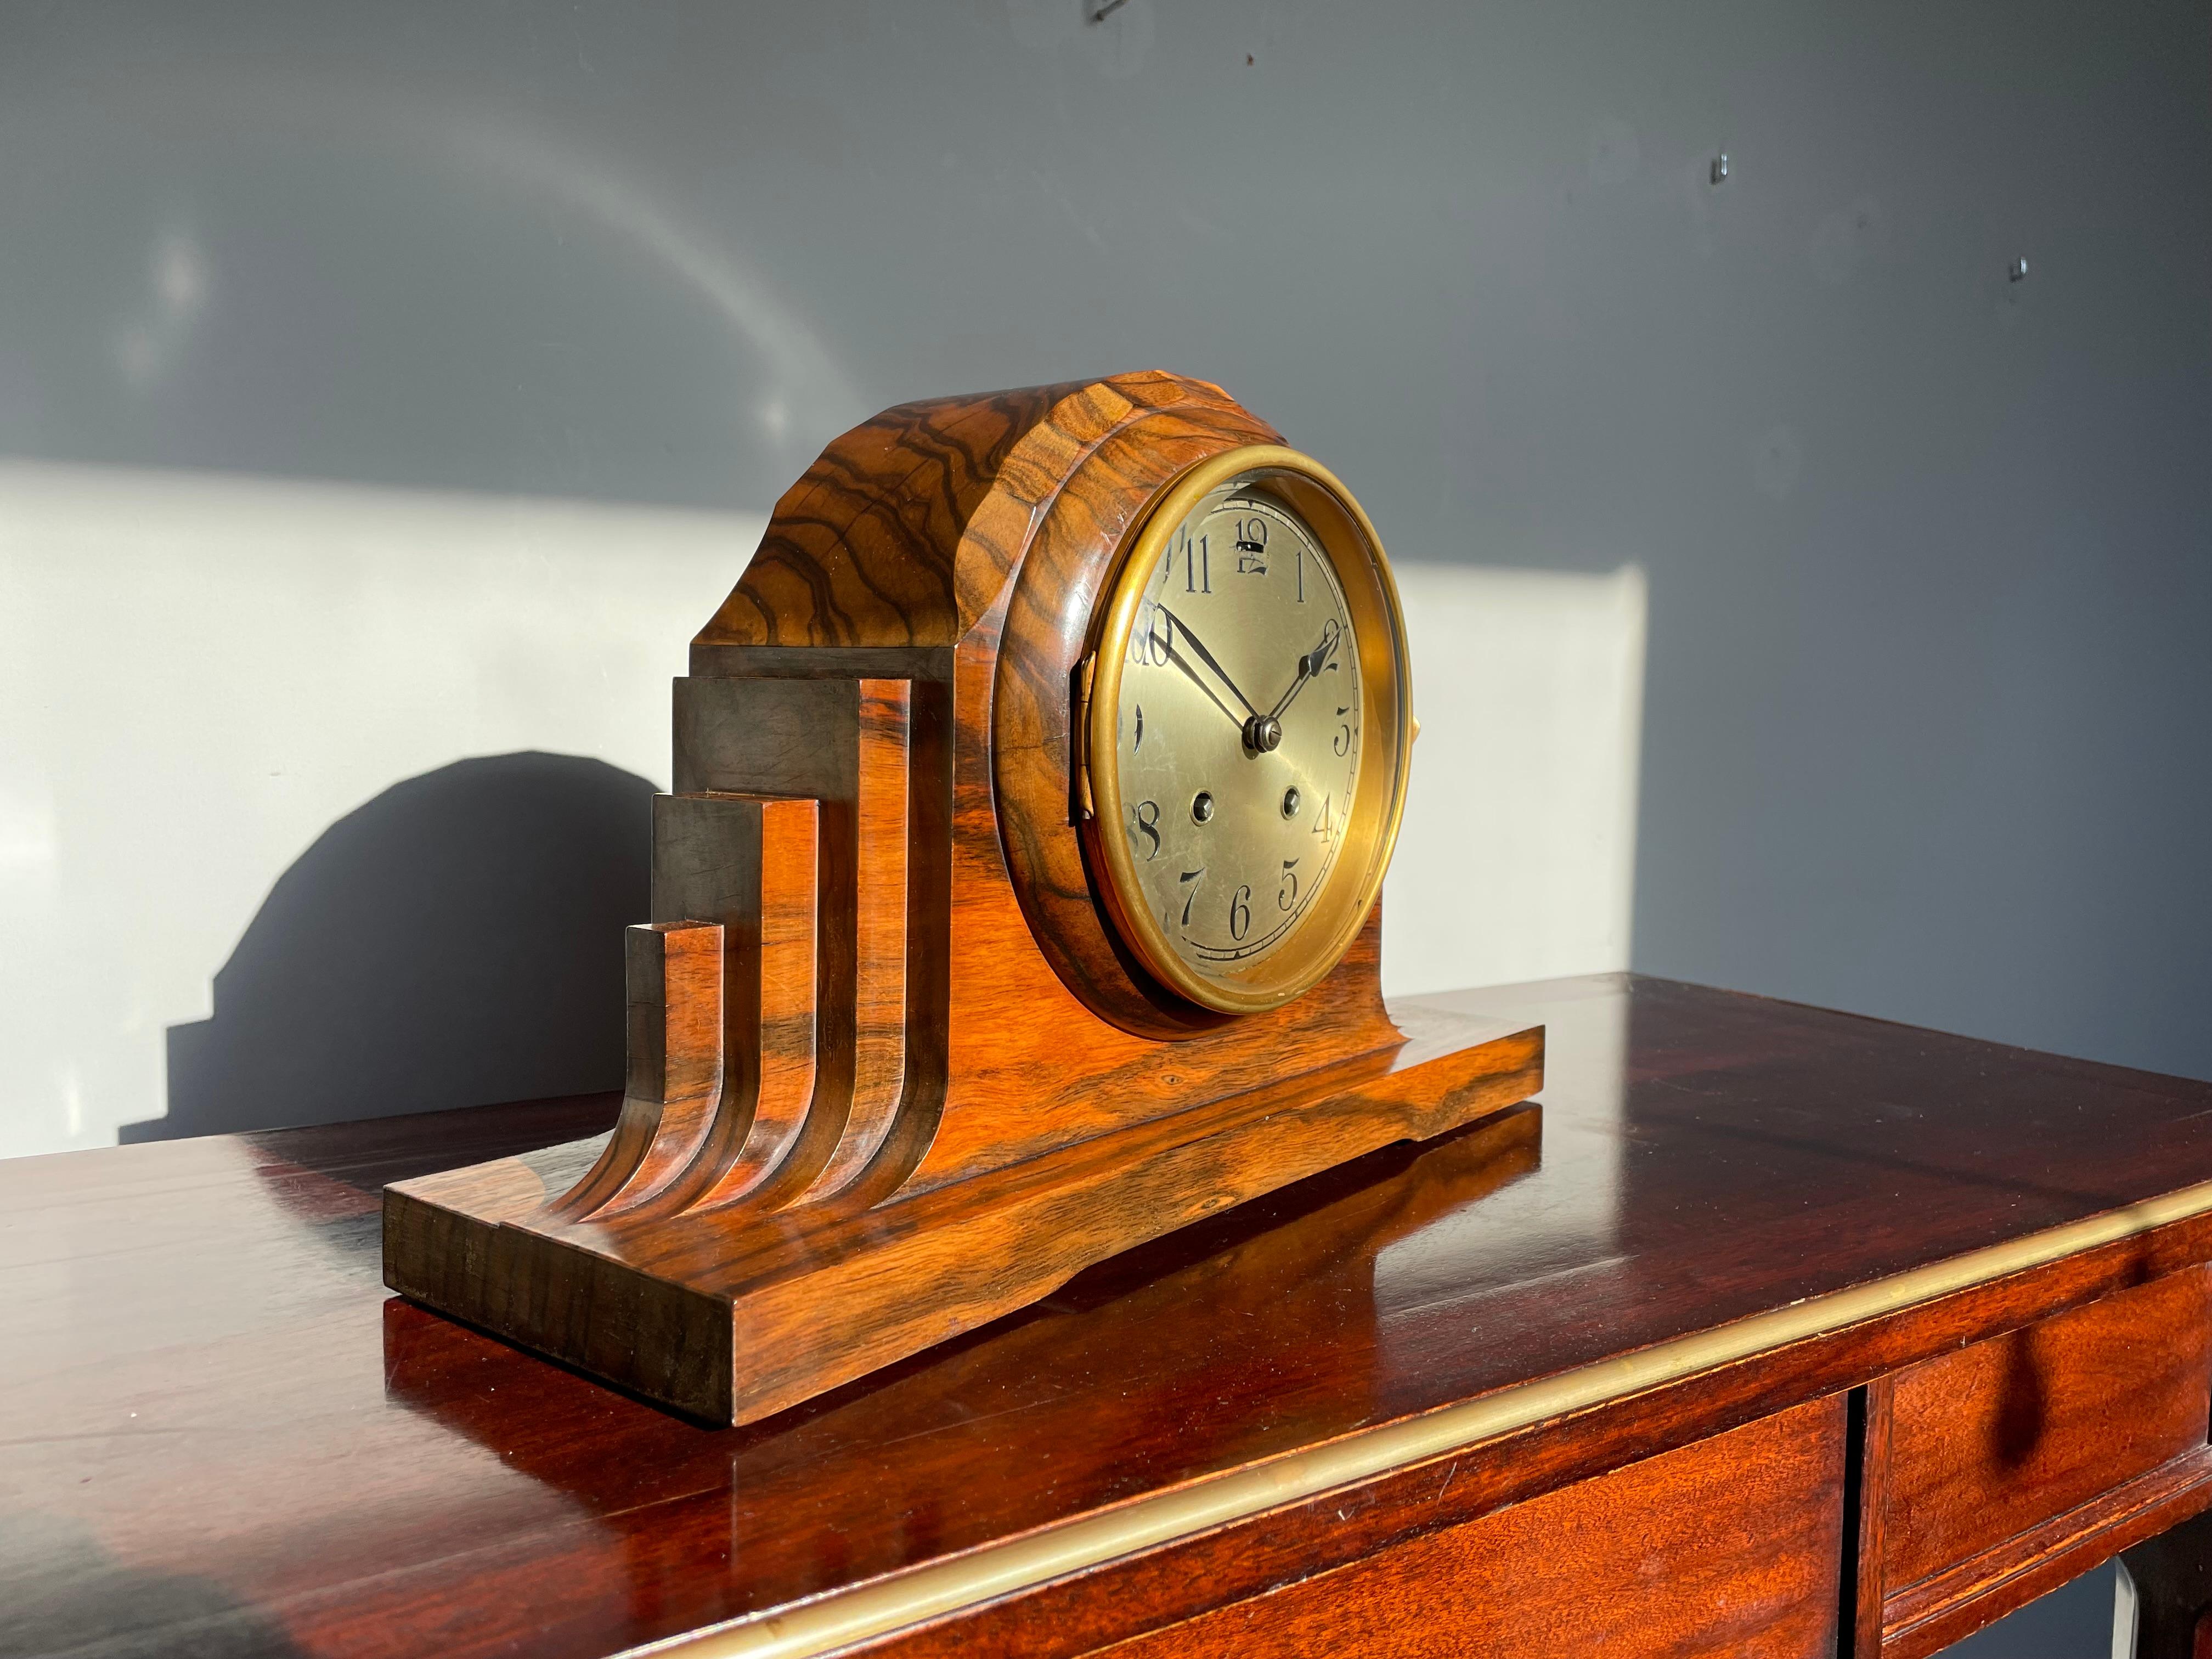 Top Design 1920s Art Deco Mantel Clock Made of Solid Coromandel w. Beveled Glass For Sale 7